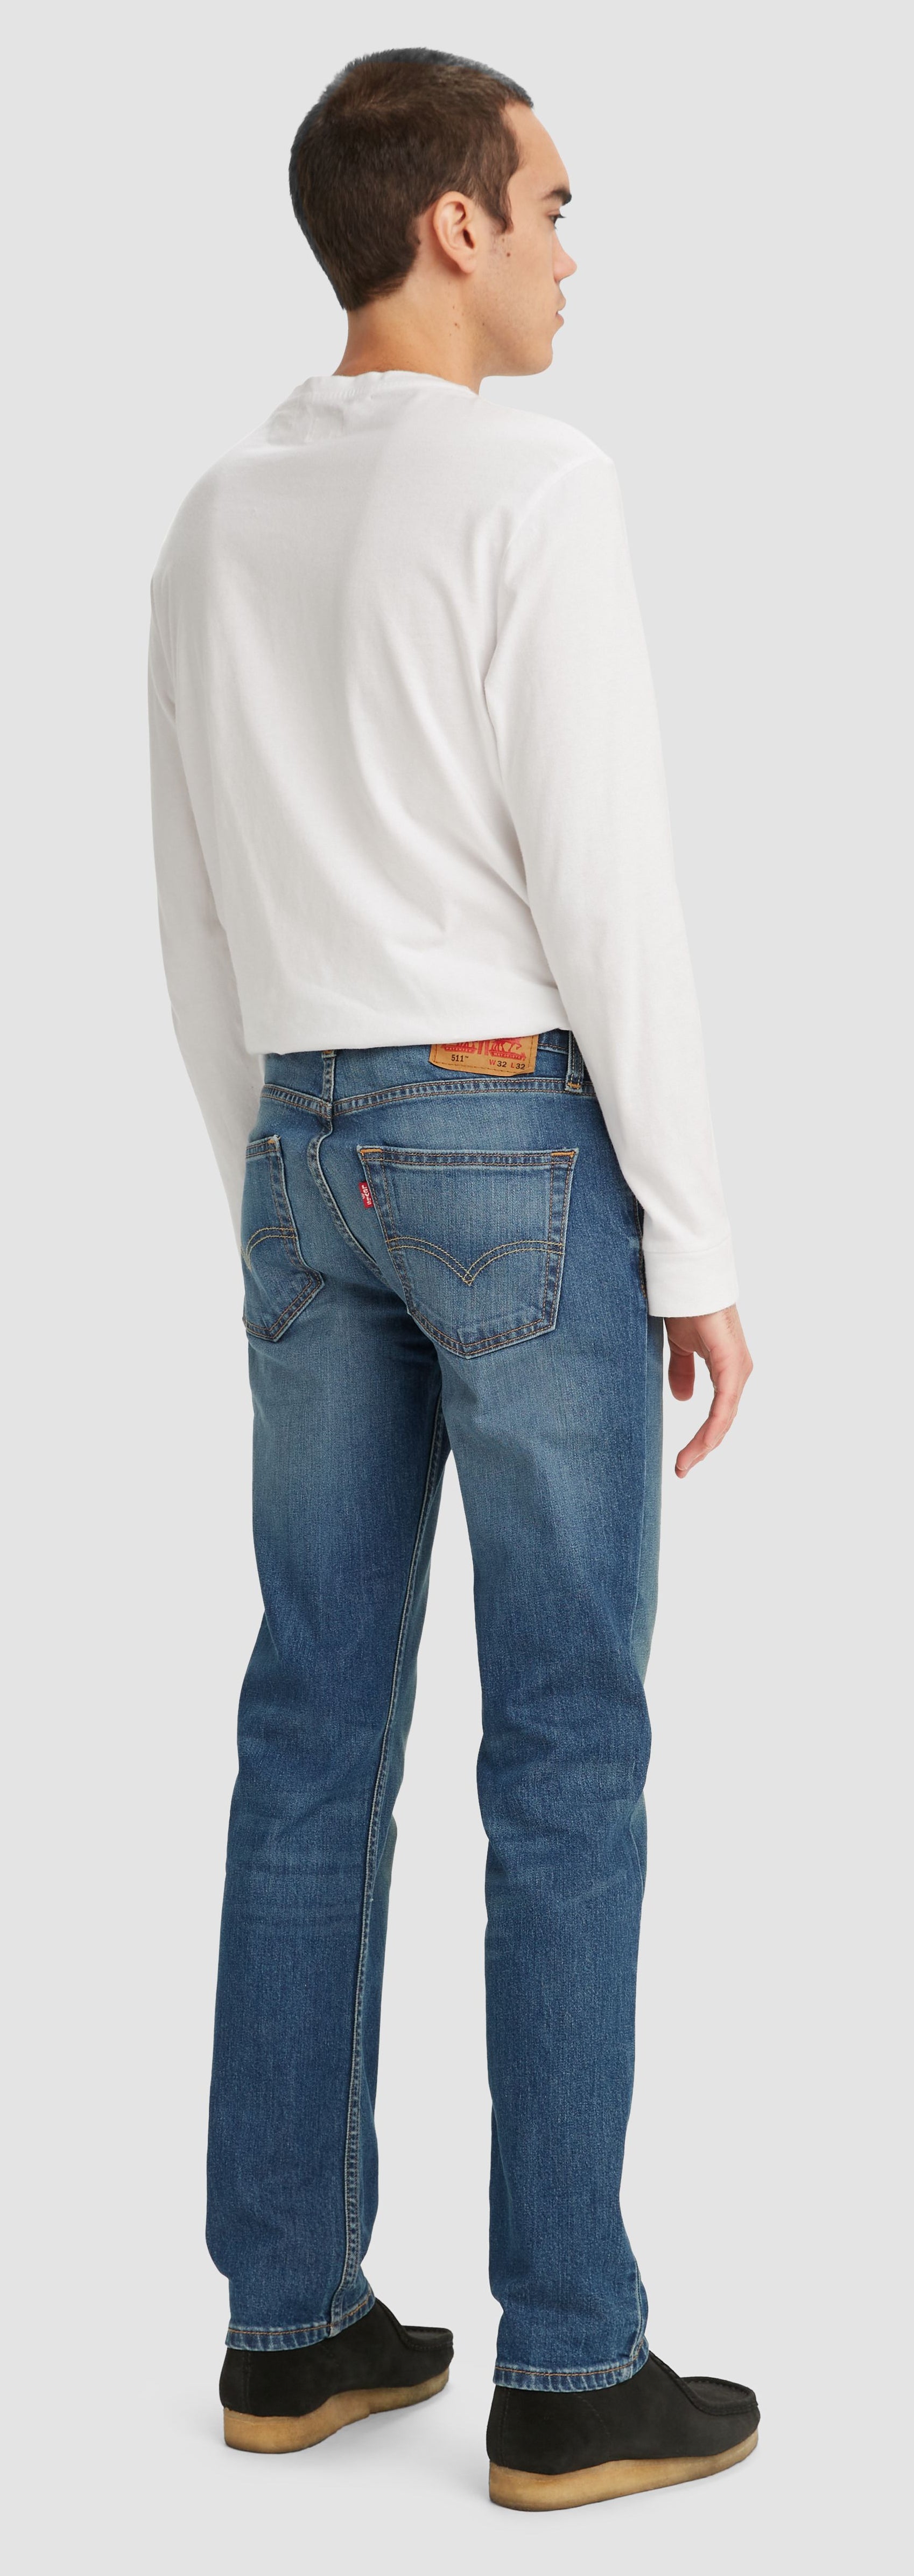 pantalones-jeans-levis-straus-511-slim-p-caballer